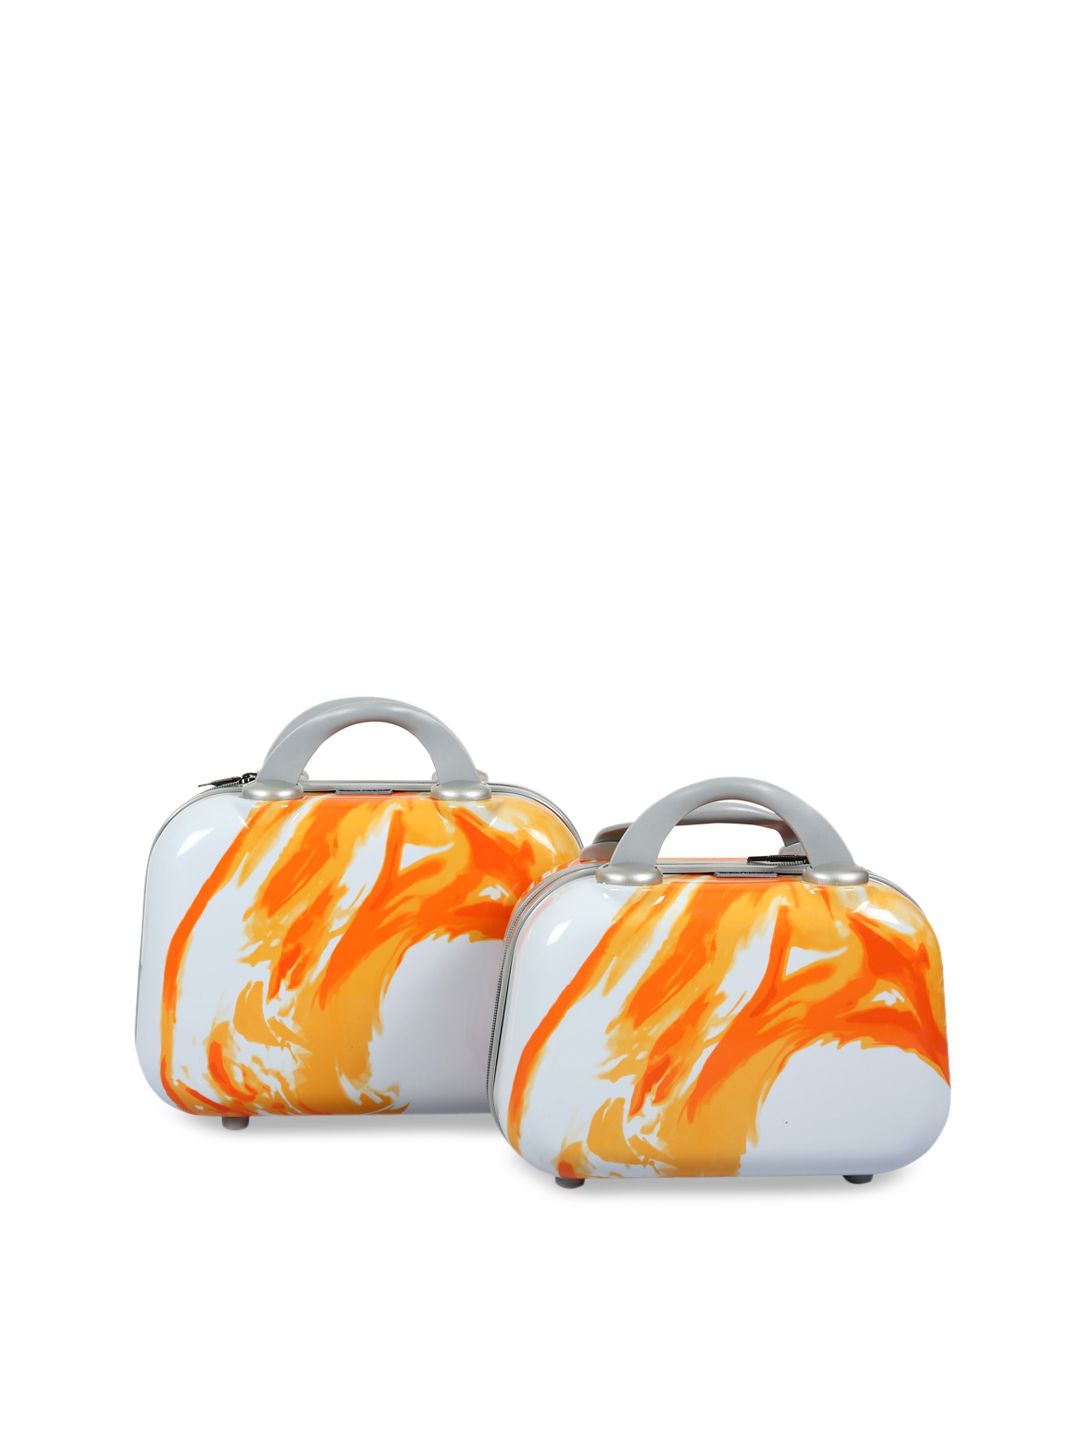 Polo Class Set of 2 Orange & White Travel Luggage Vanity Bag Price in India